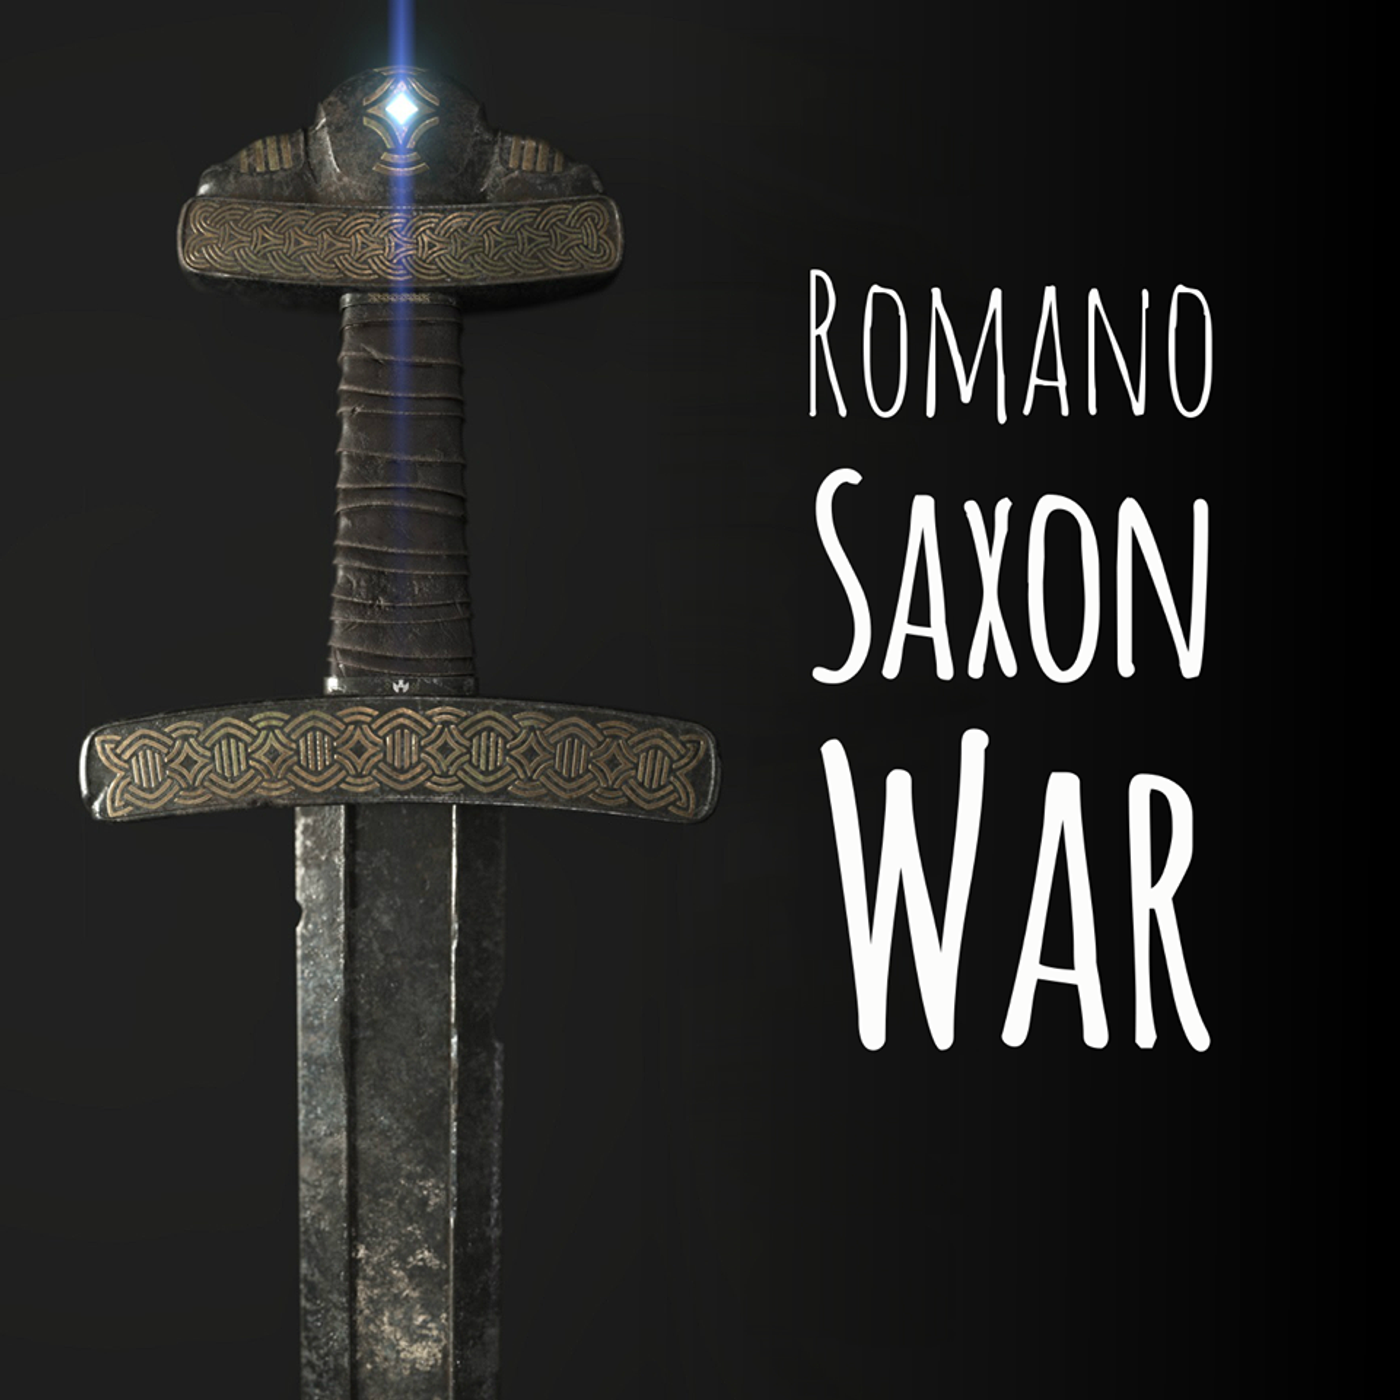 Romano Saxon War, Part 2